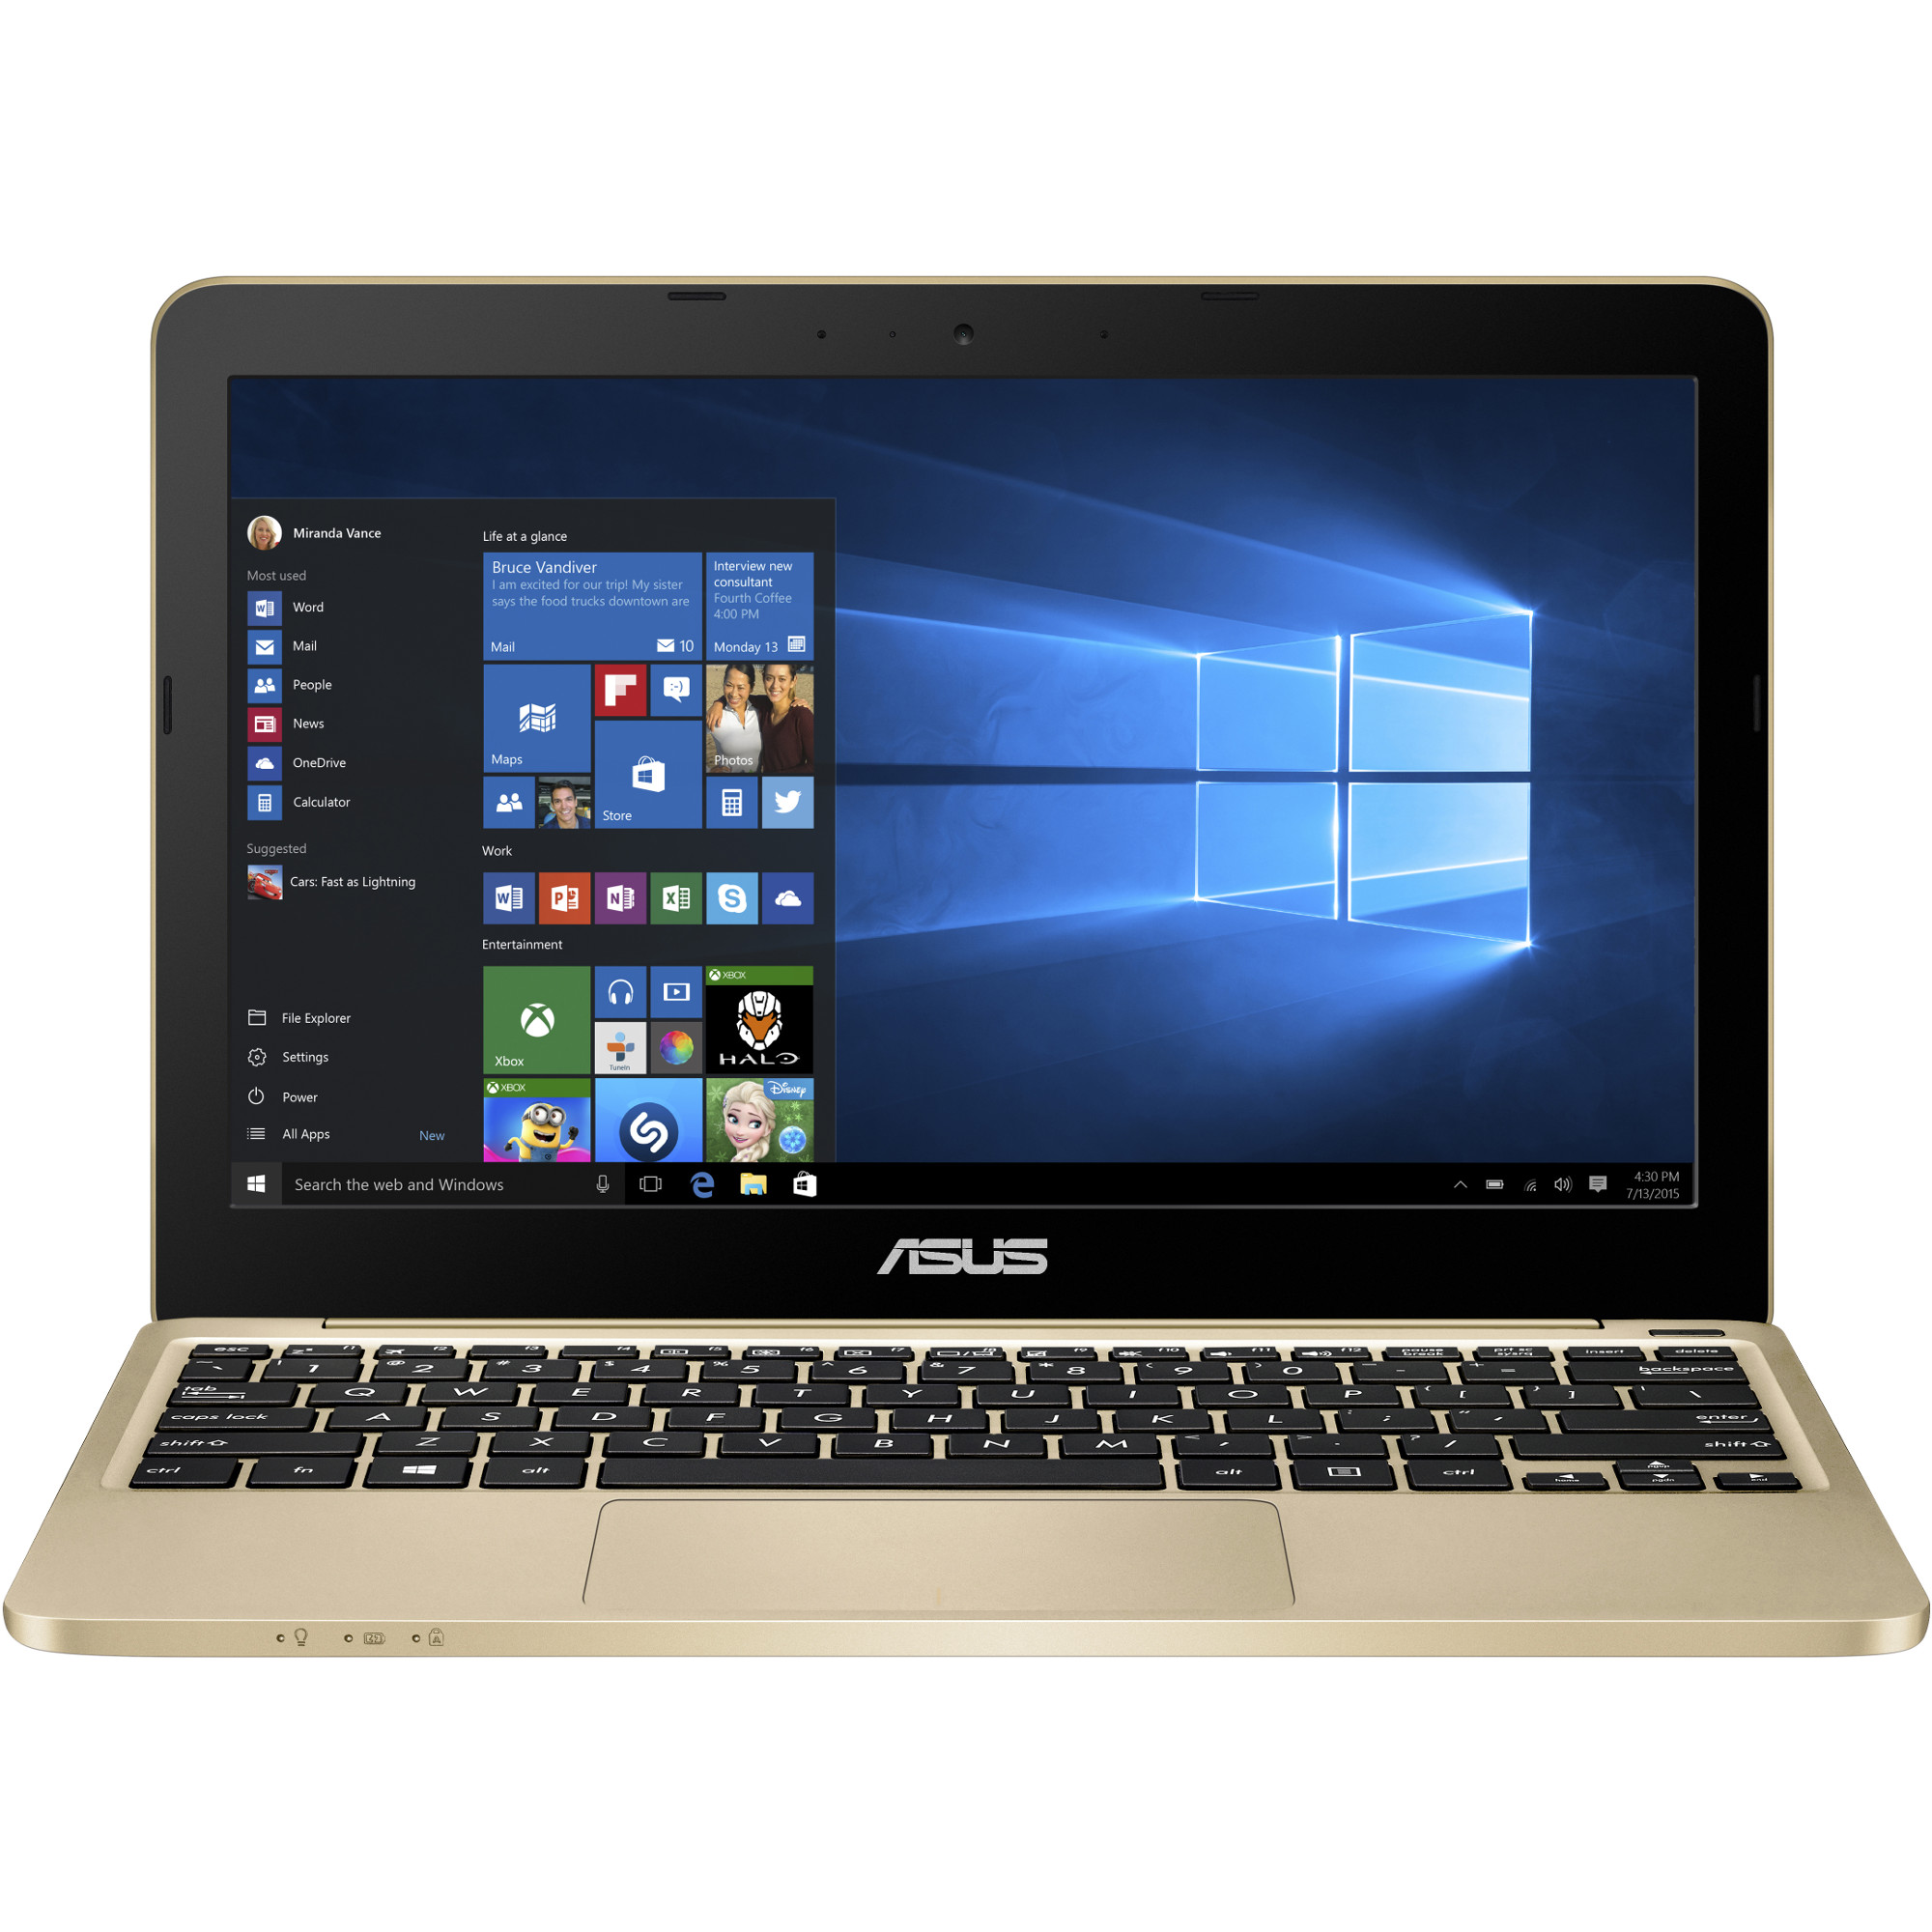 Laptop ASUS E200HA, Intel Atom X5-Z8350, 2GB DDR3, eMMC 32GB, Intel HD Graphics, Windows 10, Auriu